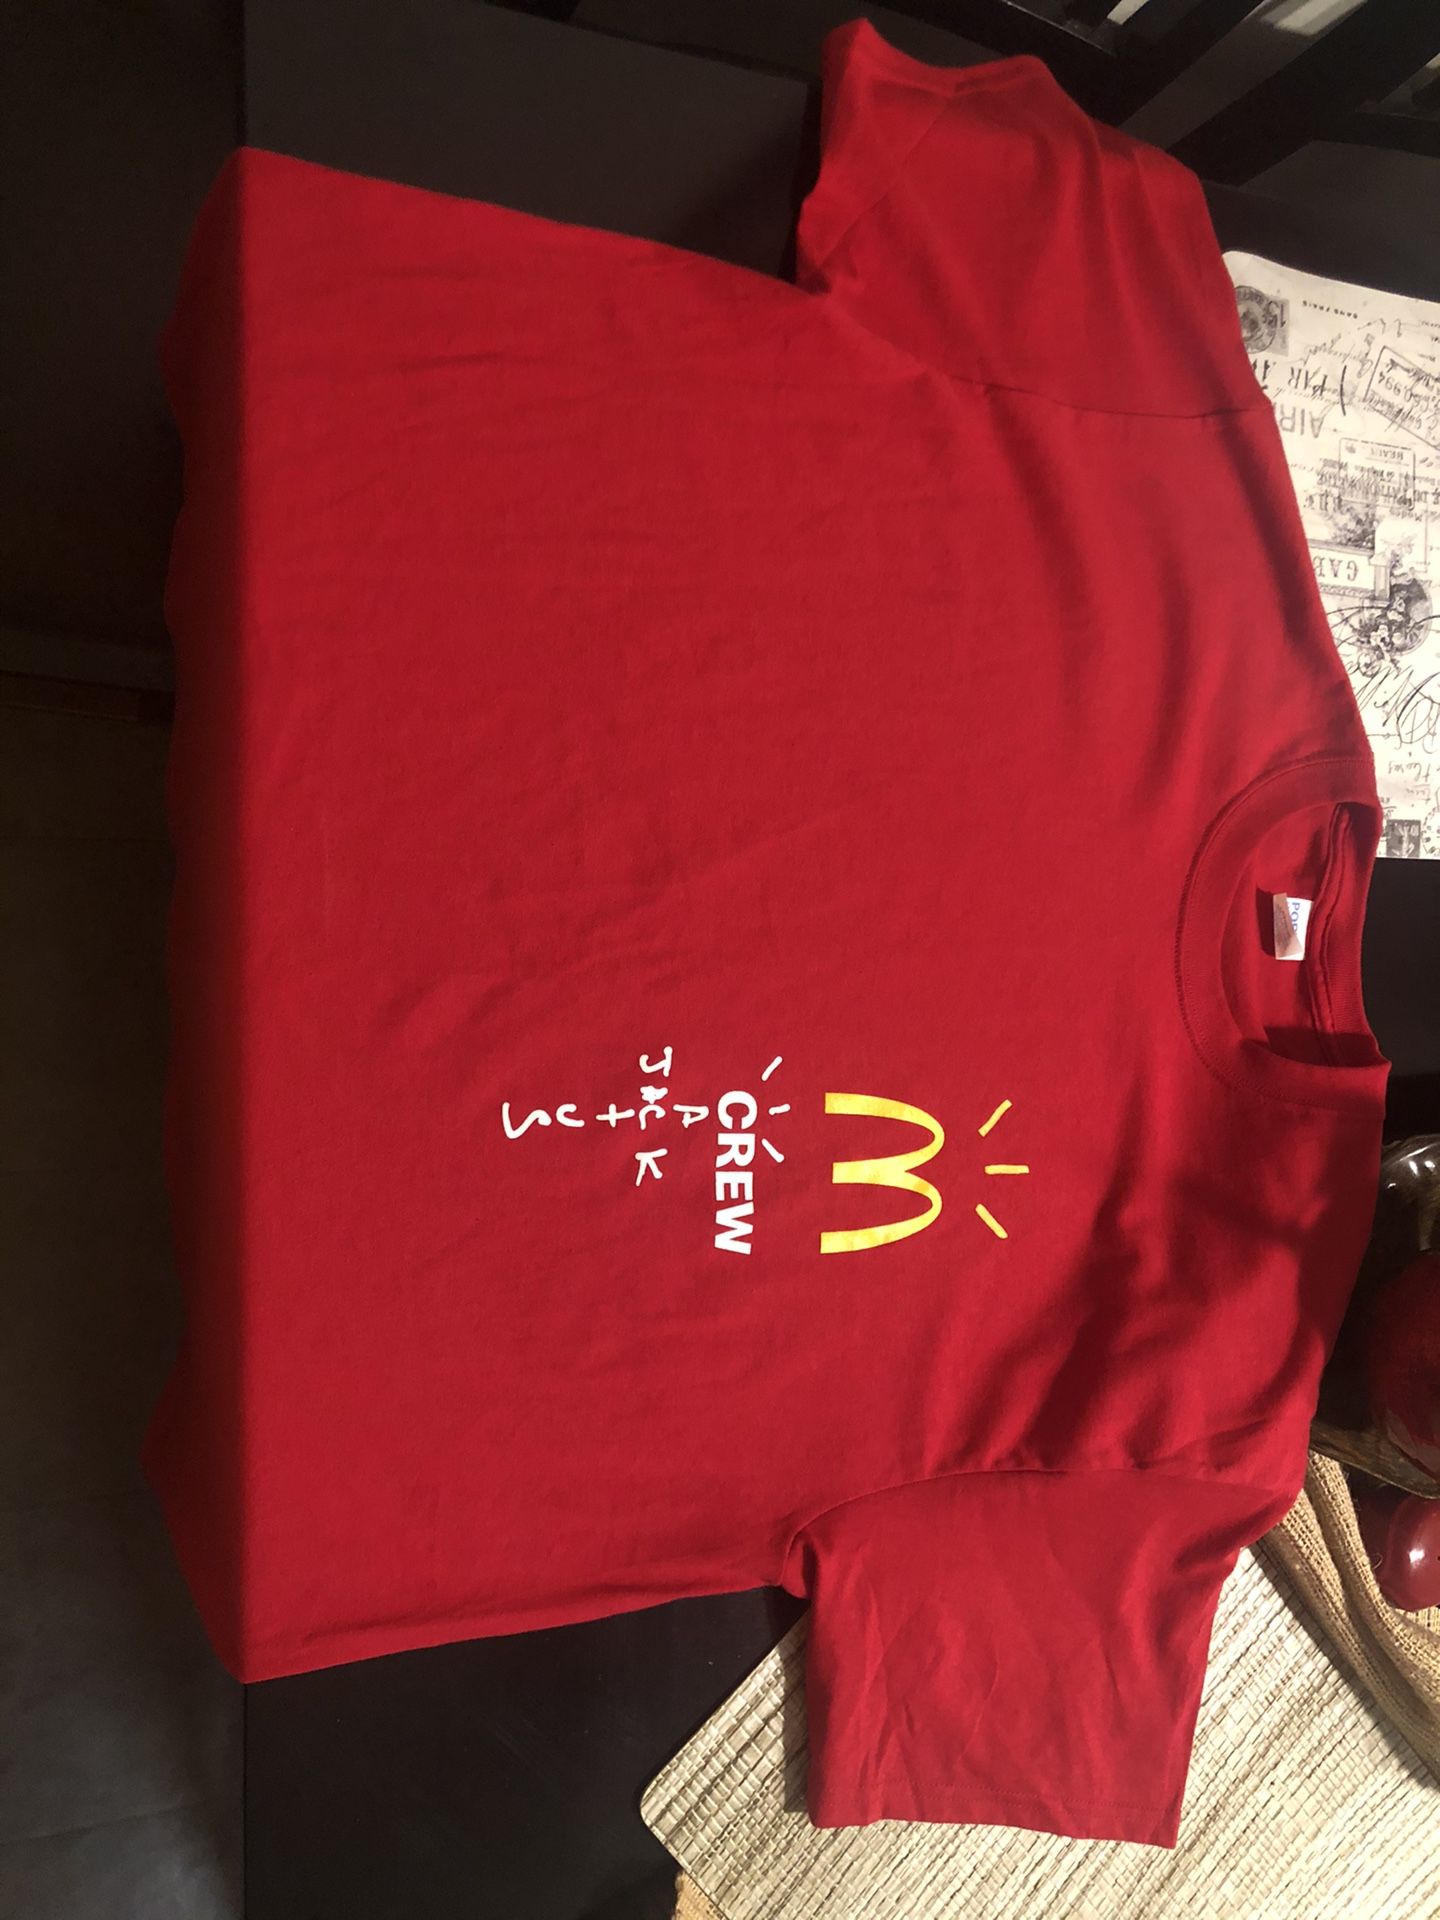 Travis Scott McDonald’s T shirt XL